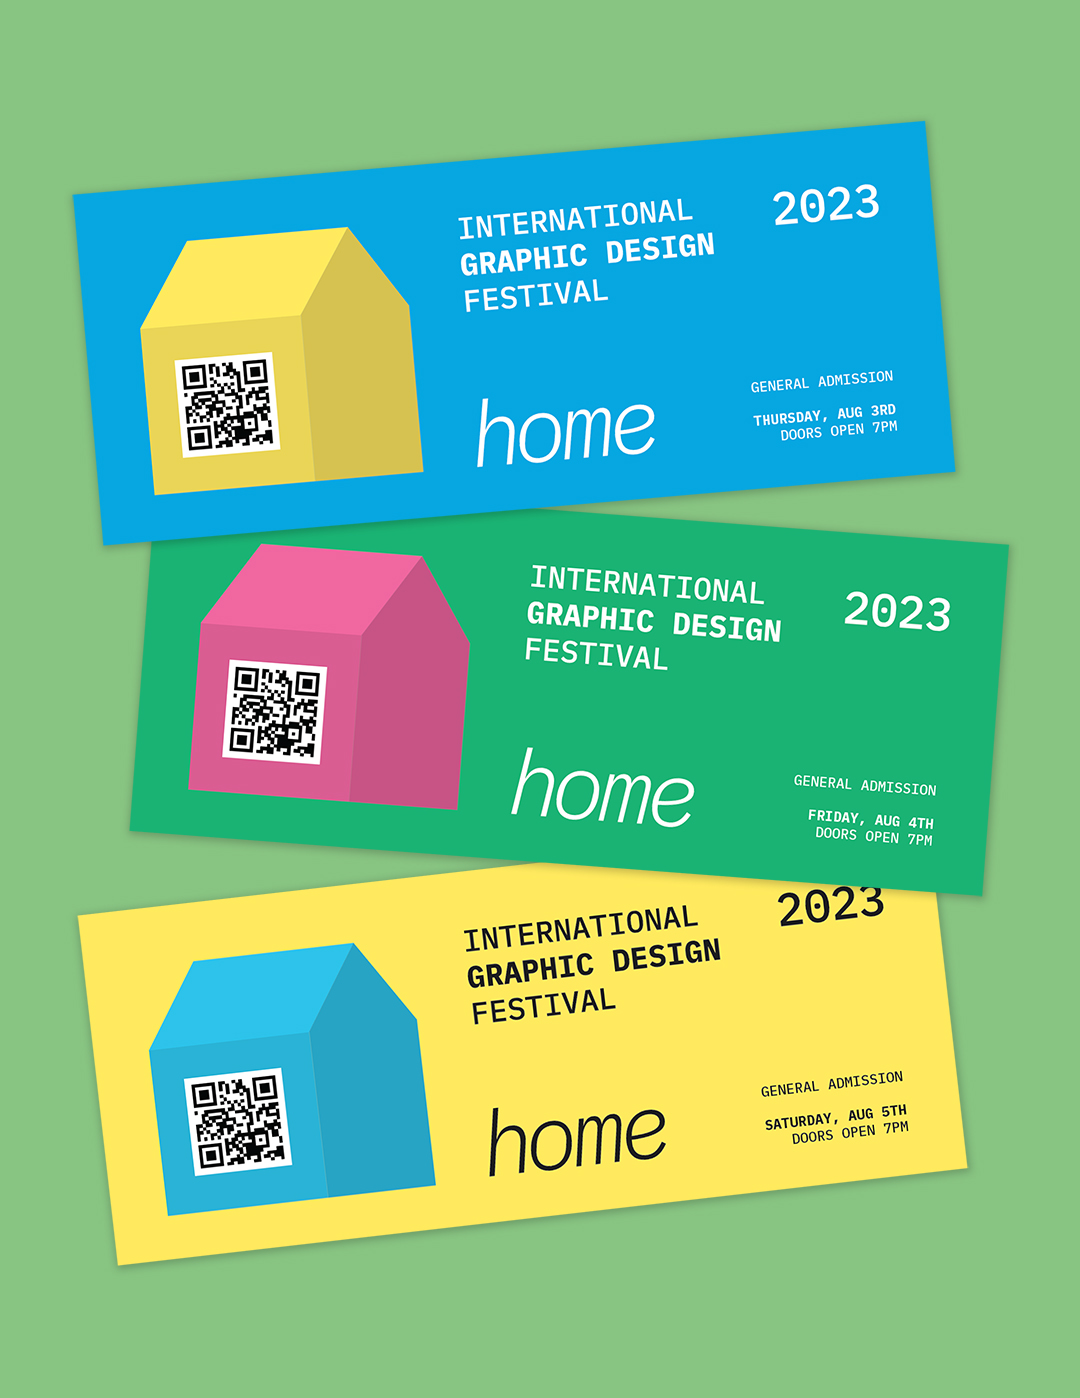 Home (International Graphic Design Festival)